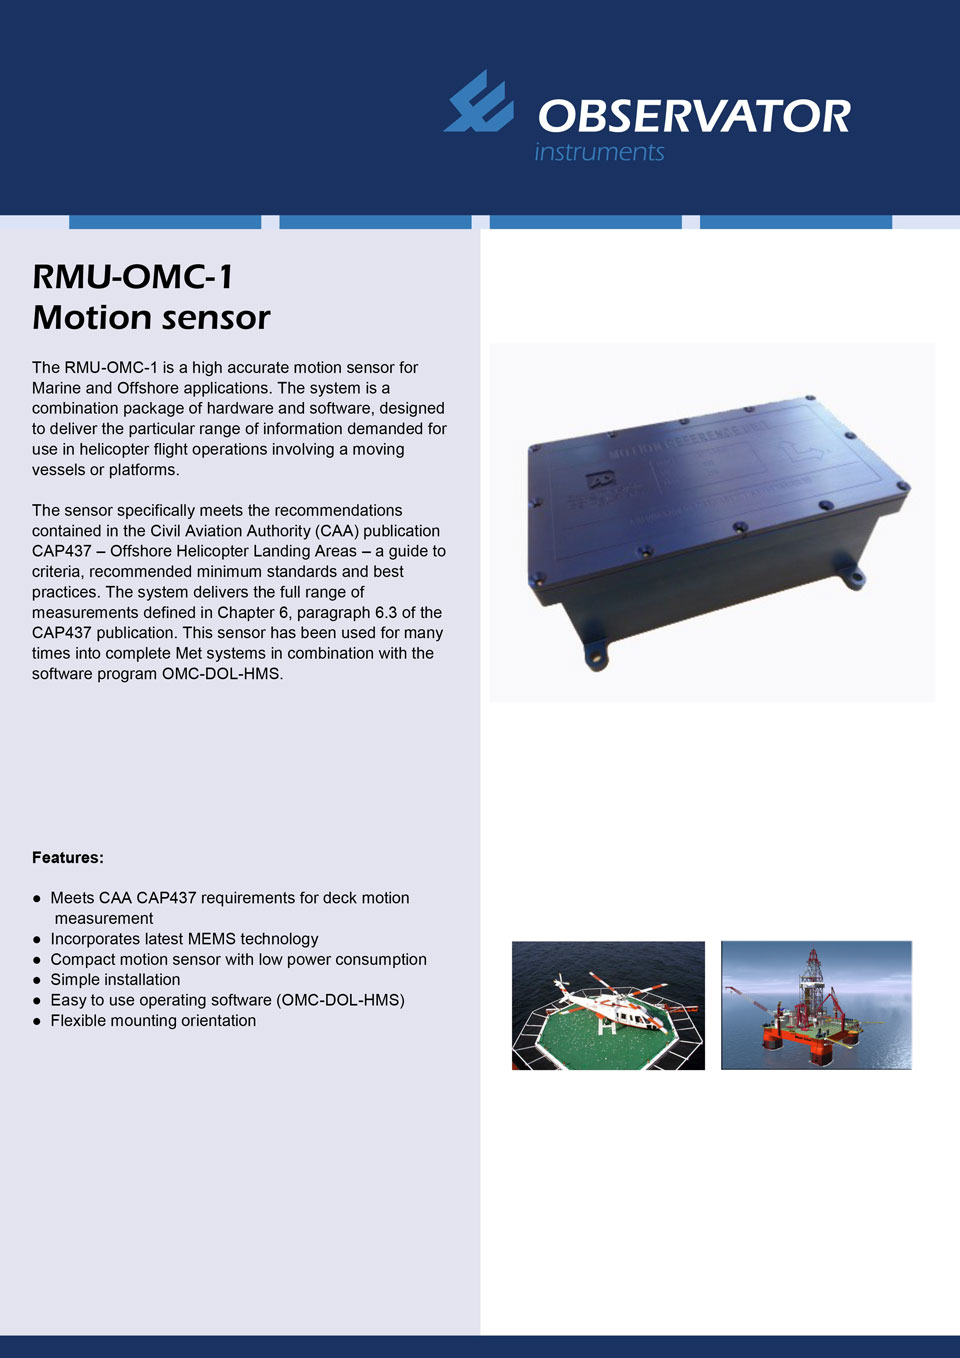 RMU-OMC-1 Motion Sensor